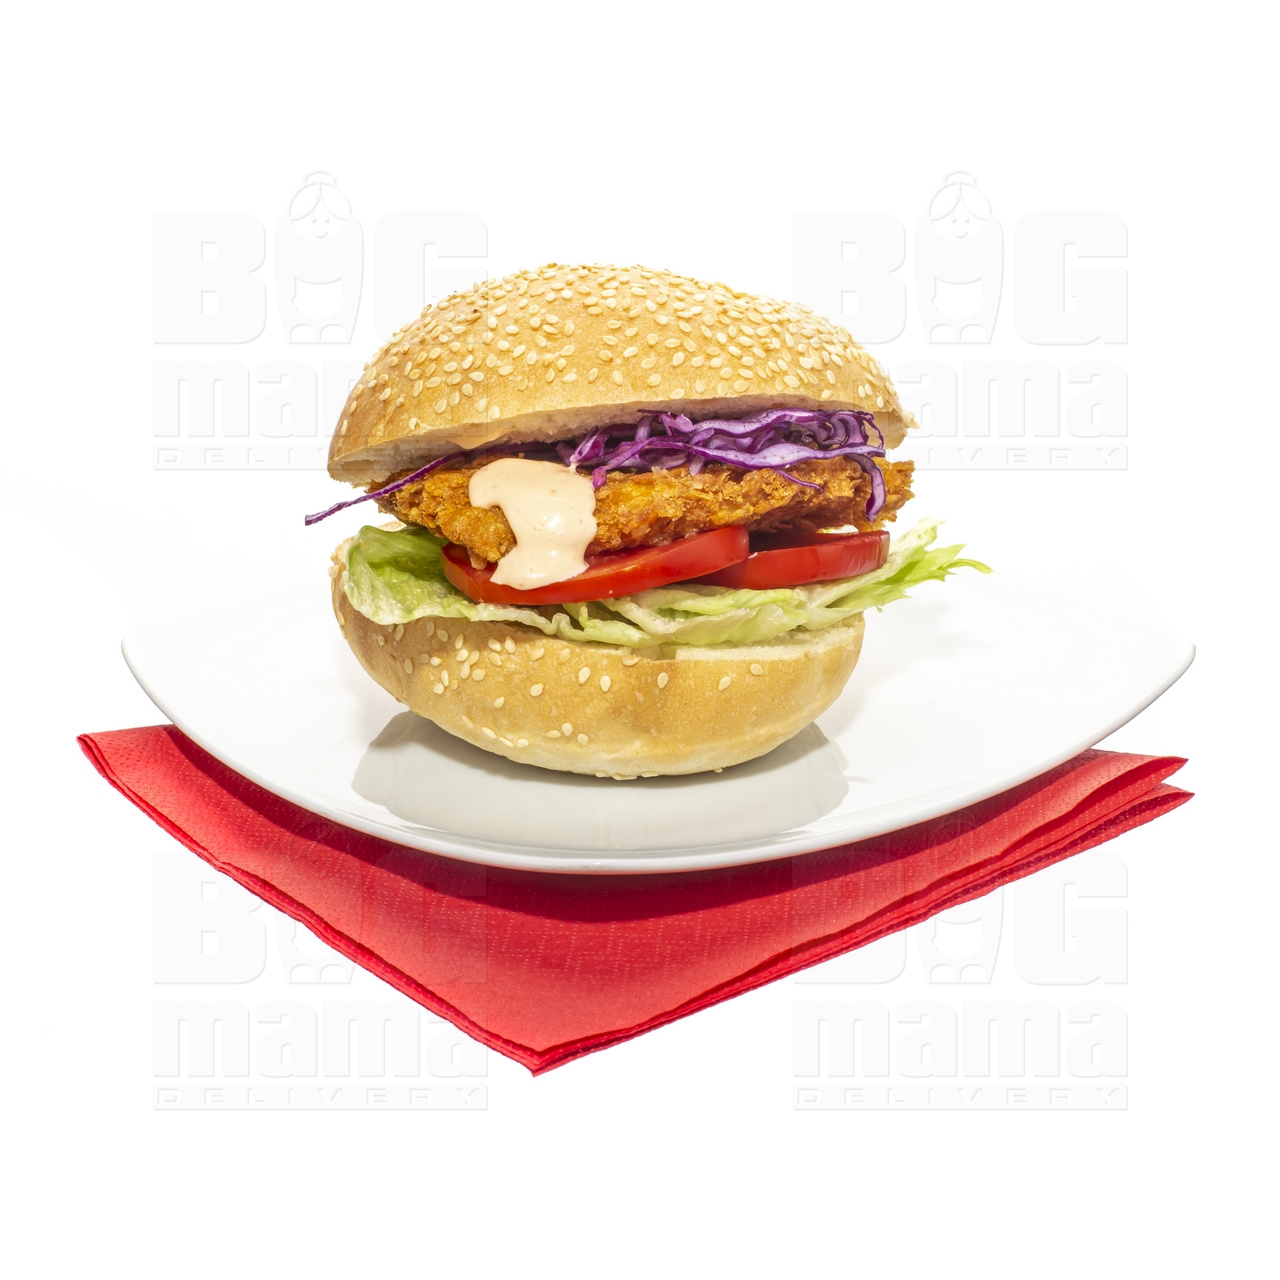 Product #205 image - Sandwich crispy